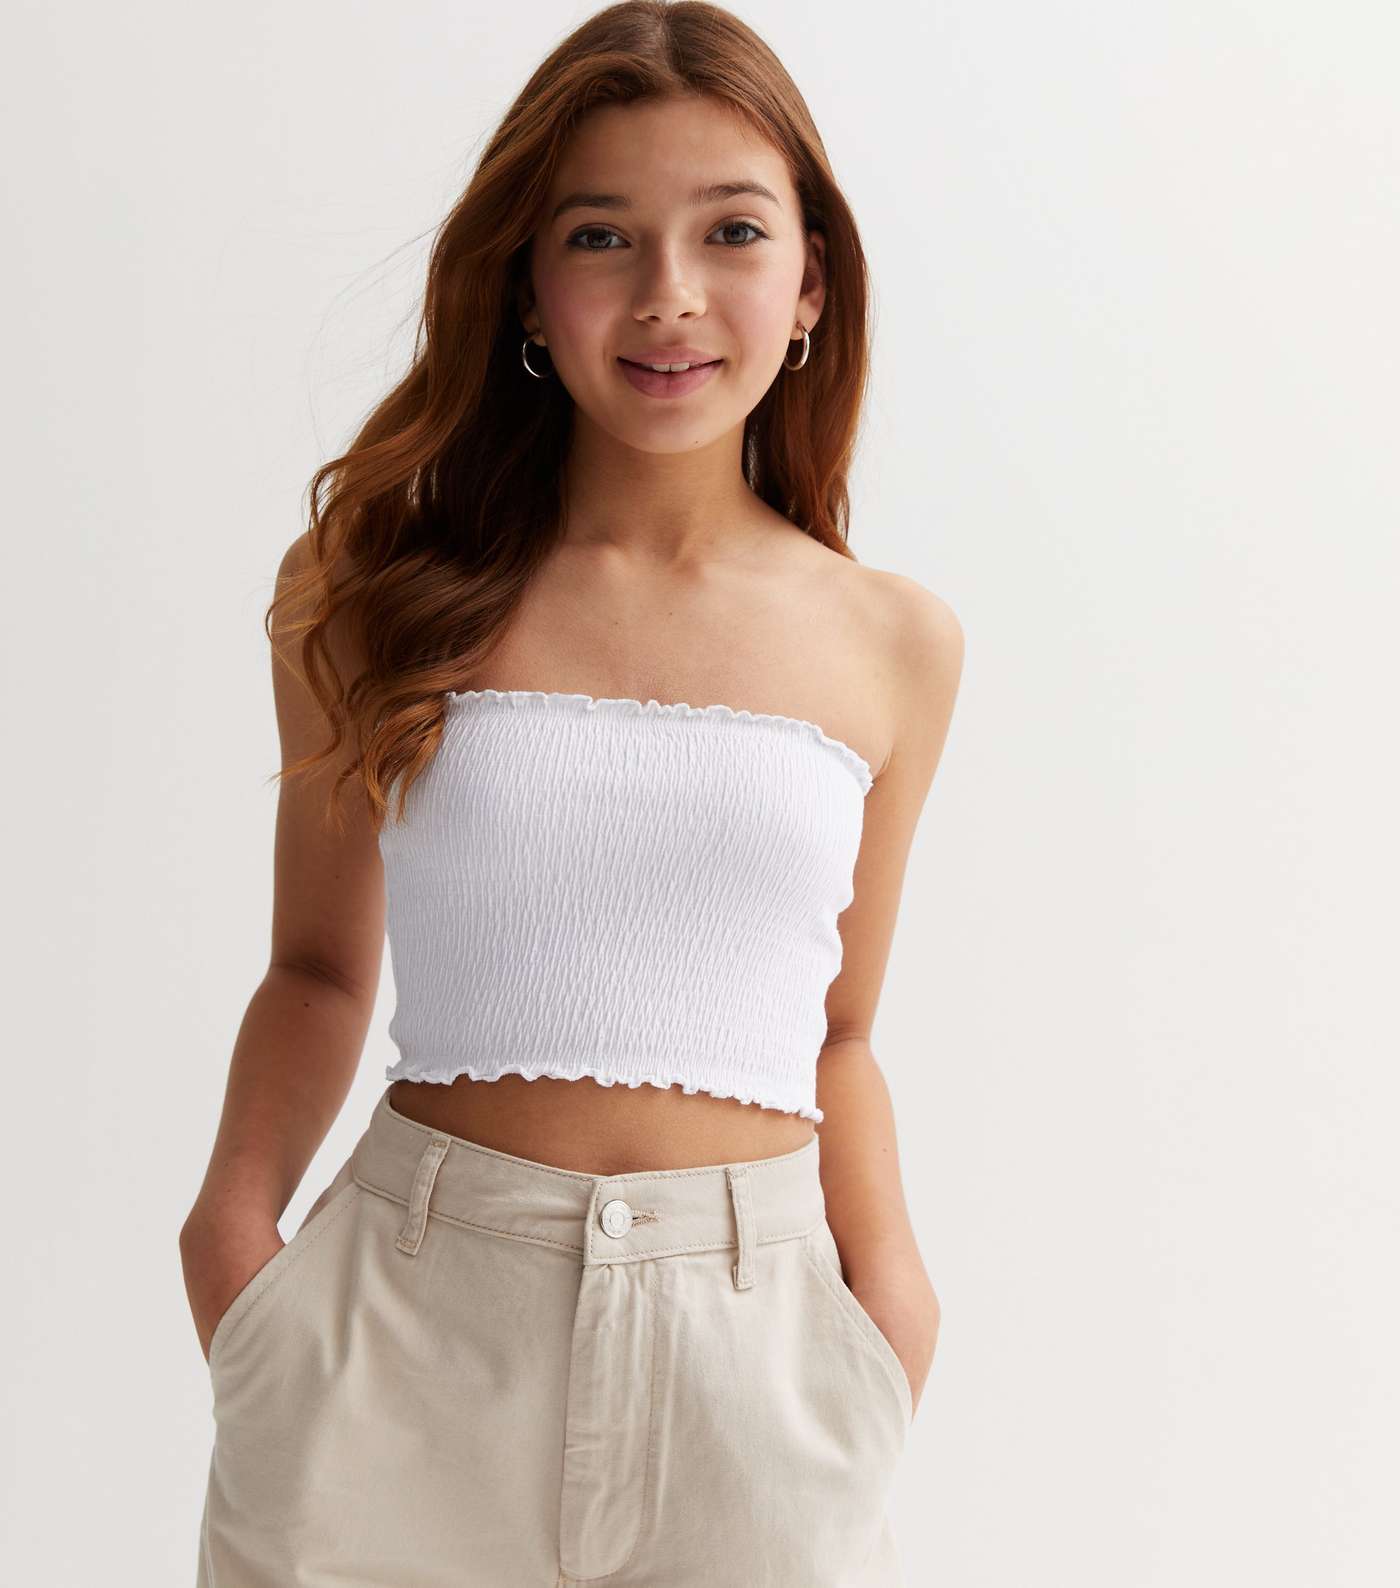 https://media2.newlookassets.com/i/newlook/855207710/girls/clothing/tops/girls-white-shirred-bandeau-top.jpg?strip=true&w=1400&qlt=60&fmt=jpeg